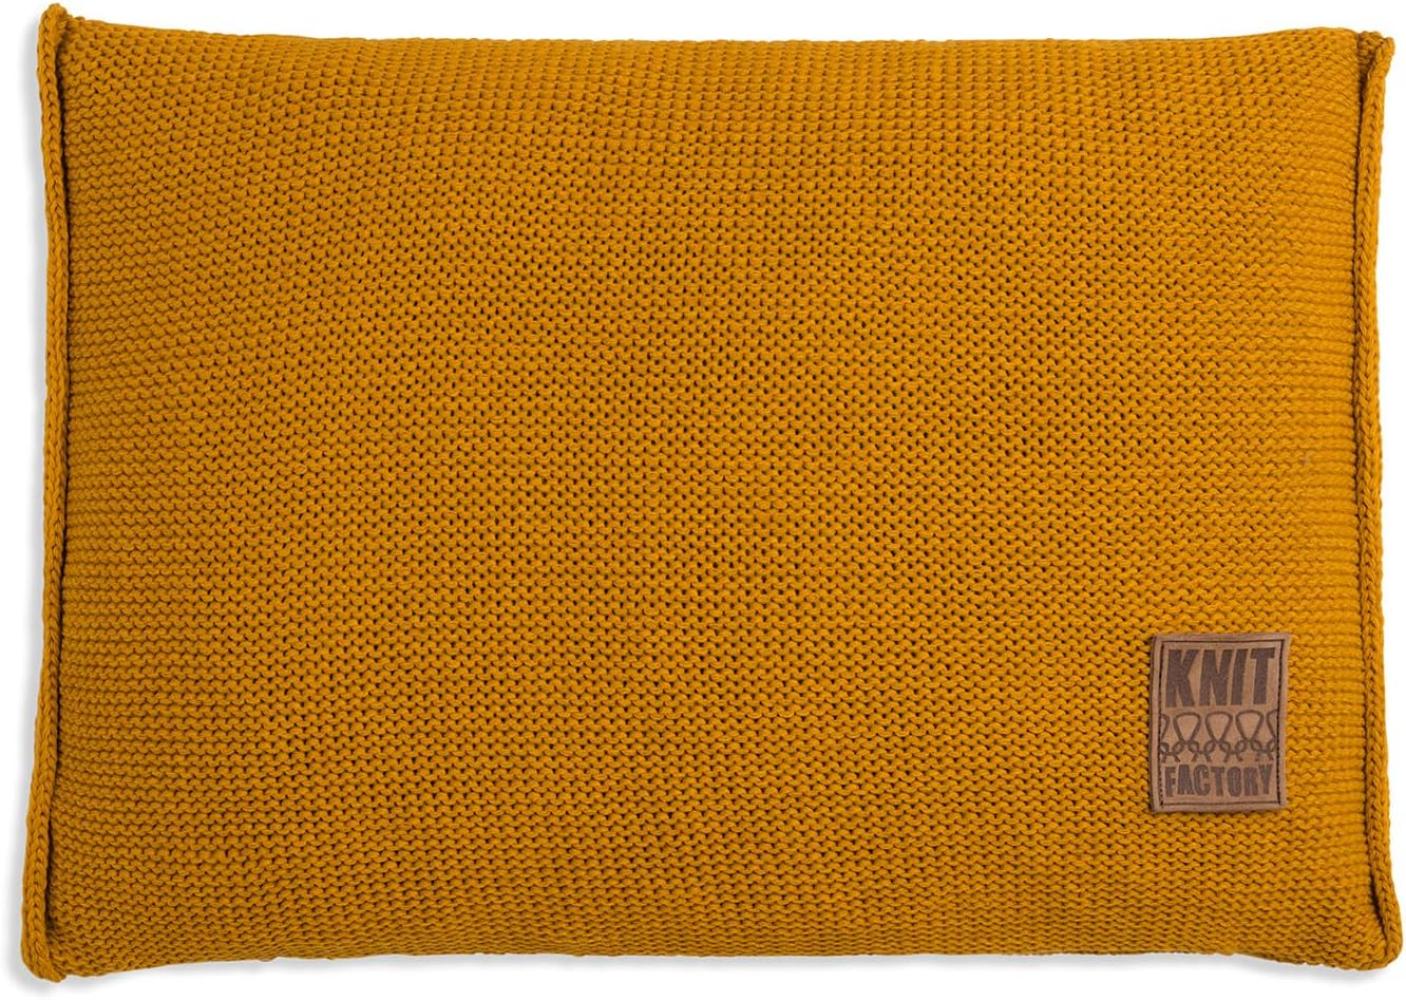 Knit Factory Uni Kissen 60x40 cm Glatt Gelb Bild 1